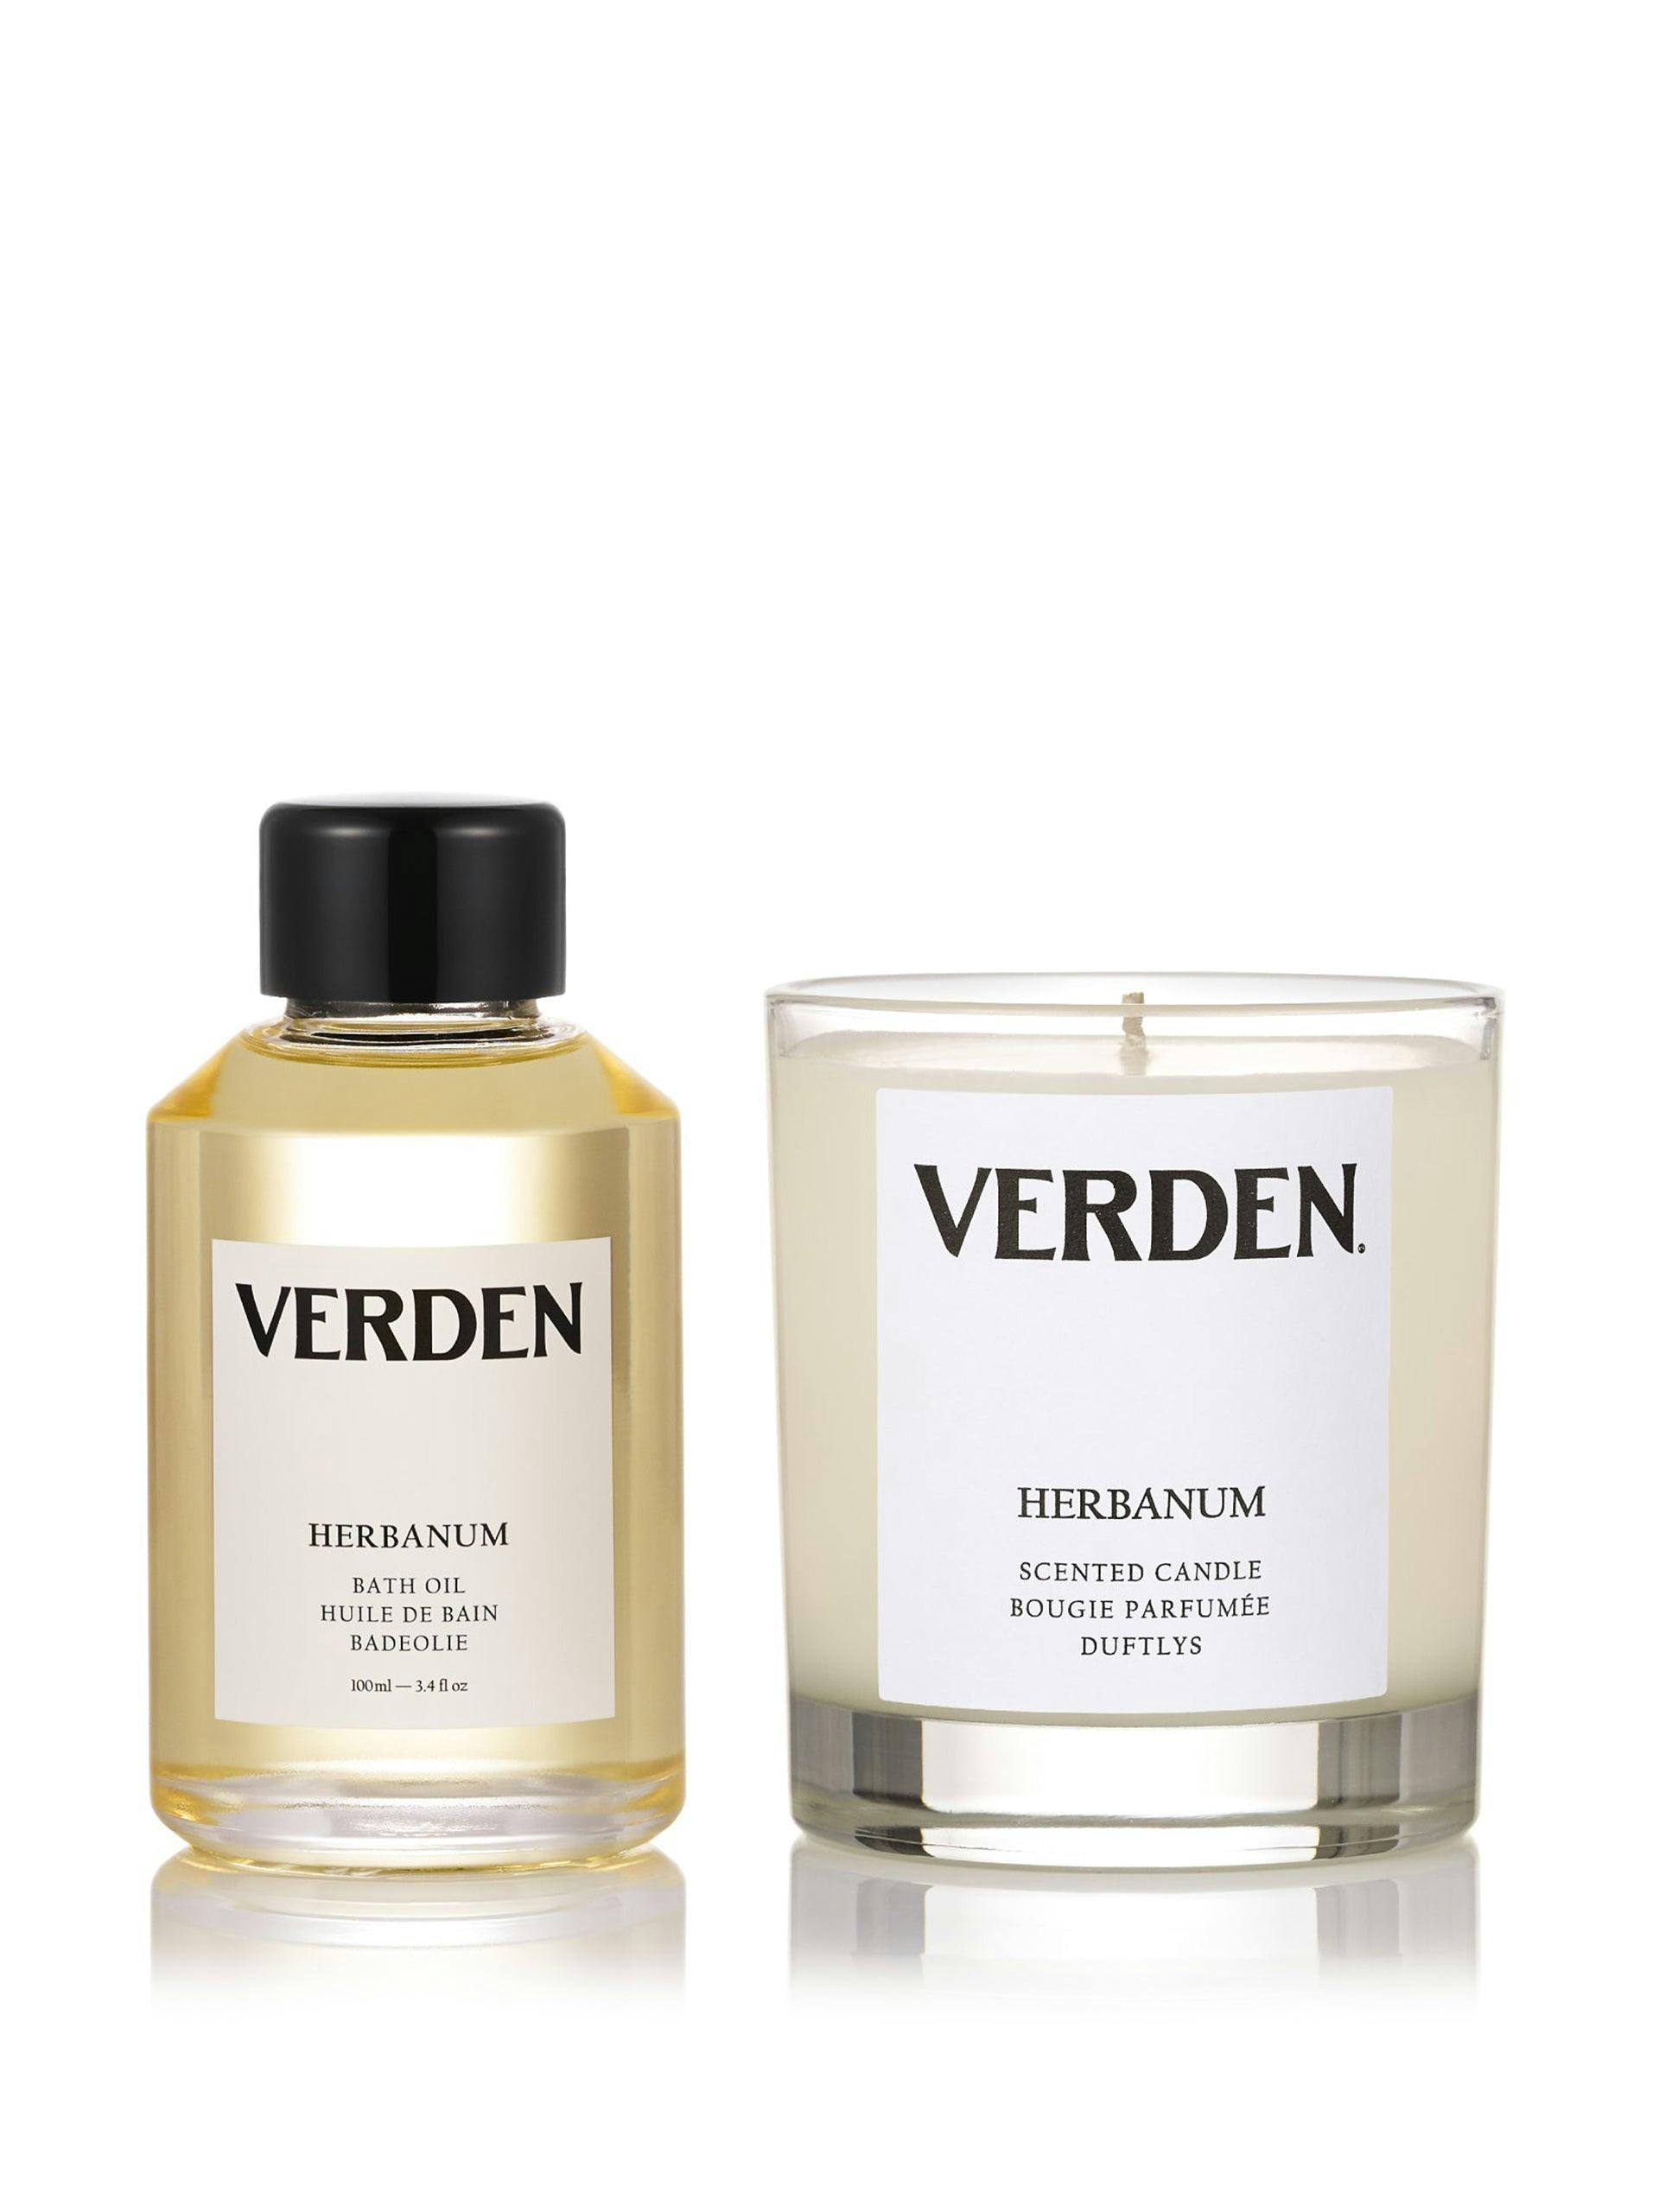 Herbanum bath oil and candle set